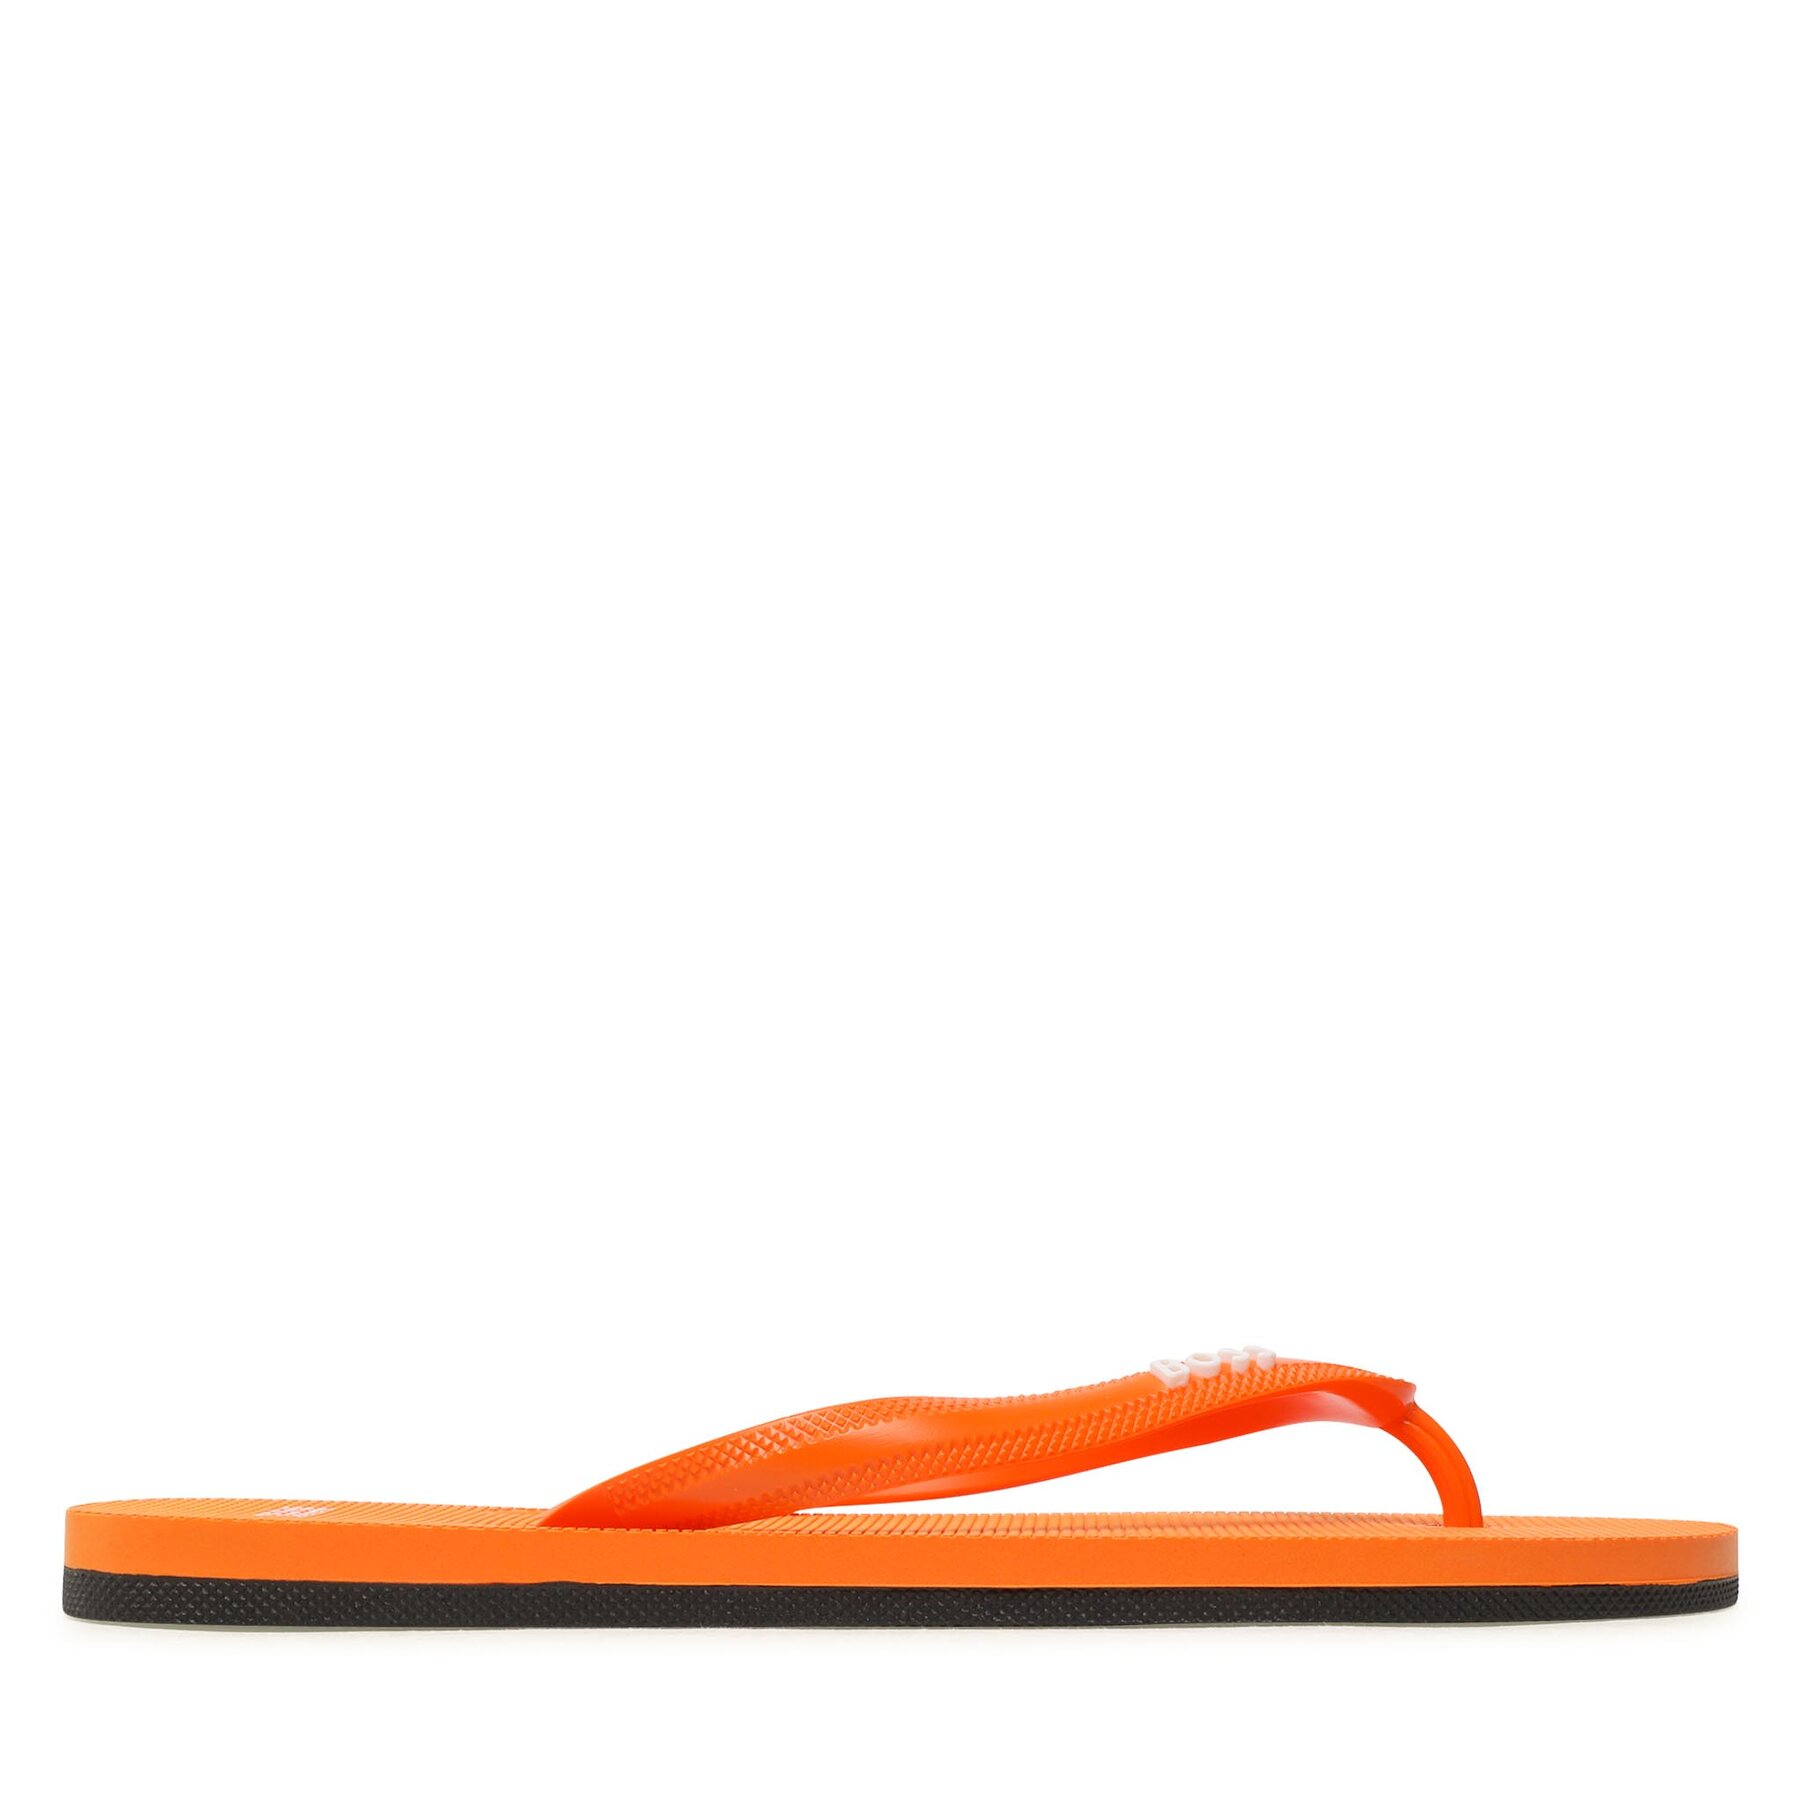 Hugo Boss Flip Flops Bright Orange 829 - Sandalias hombre